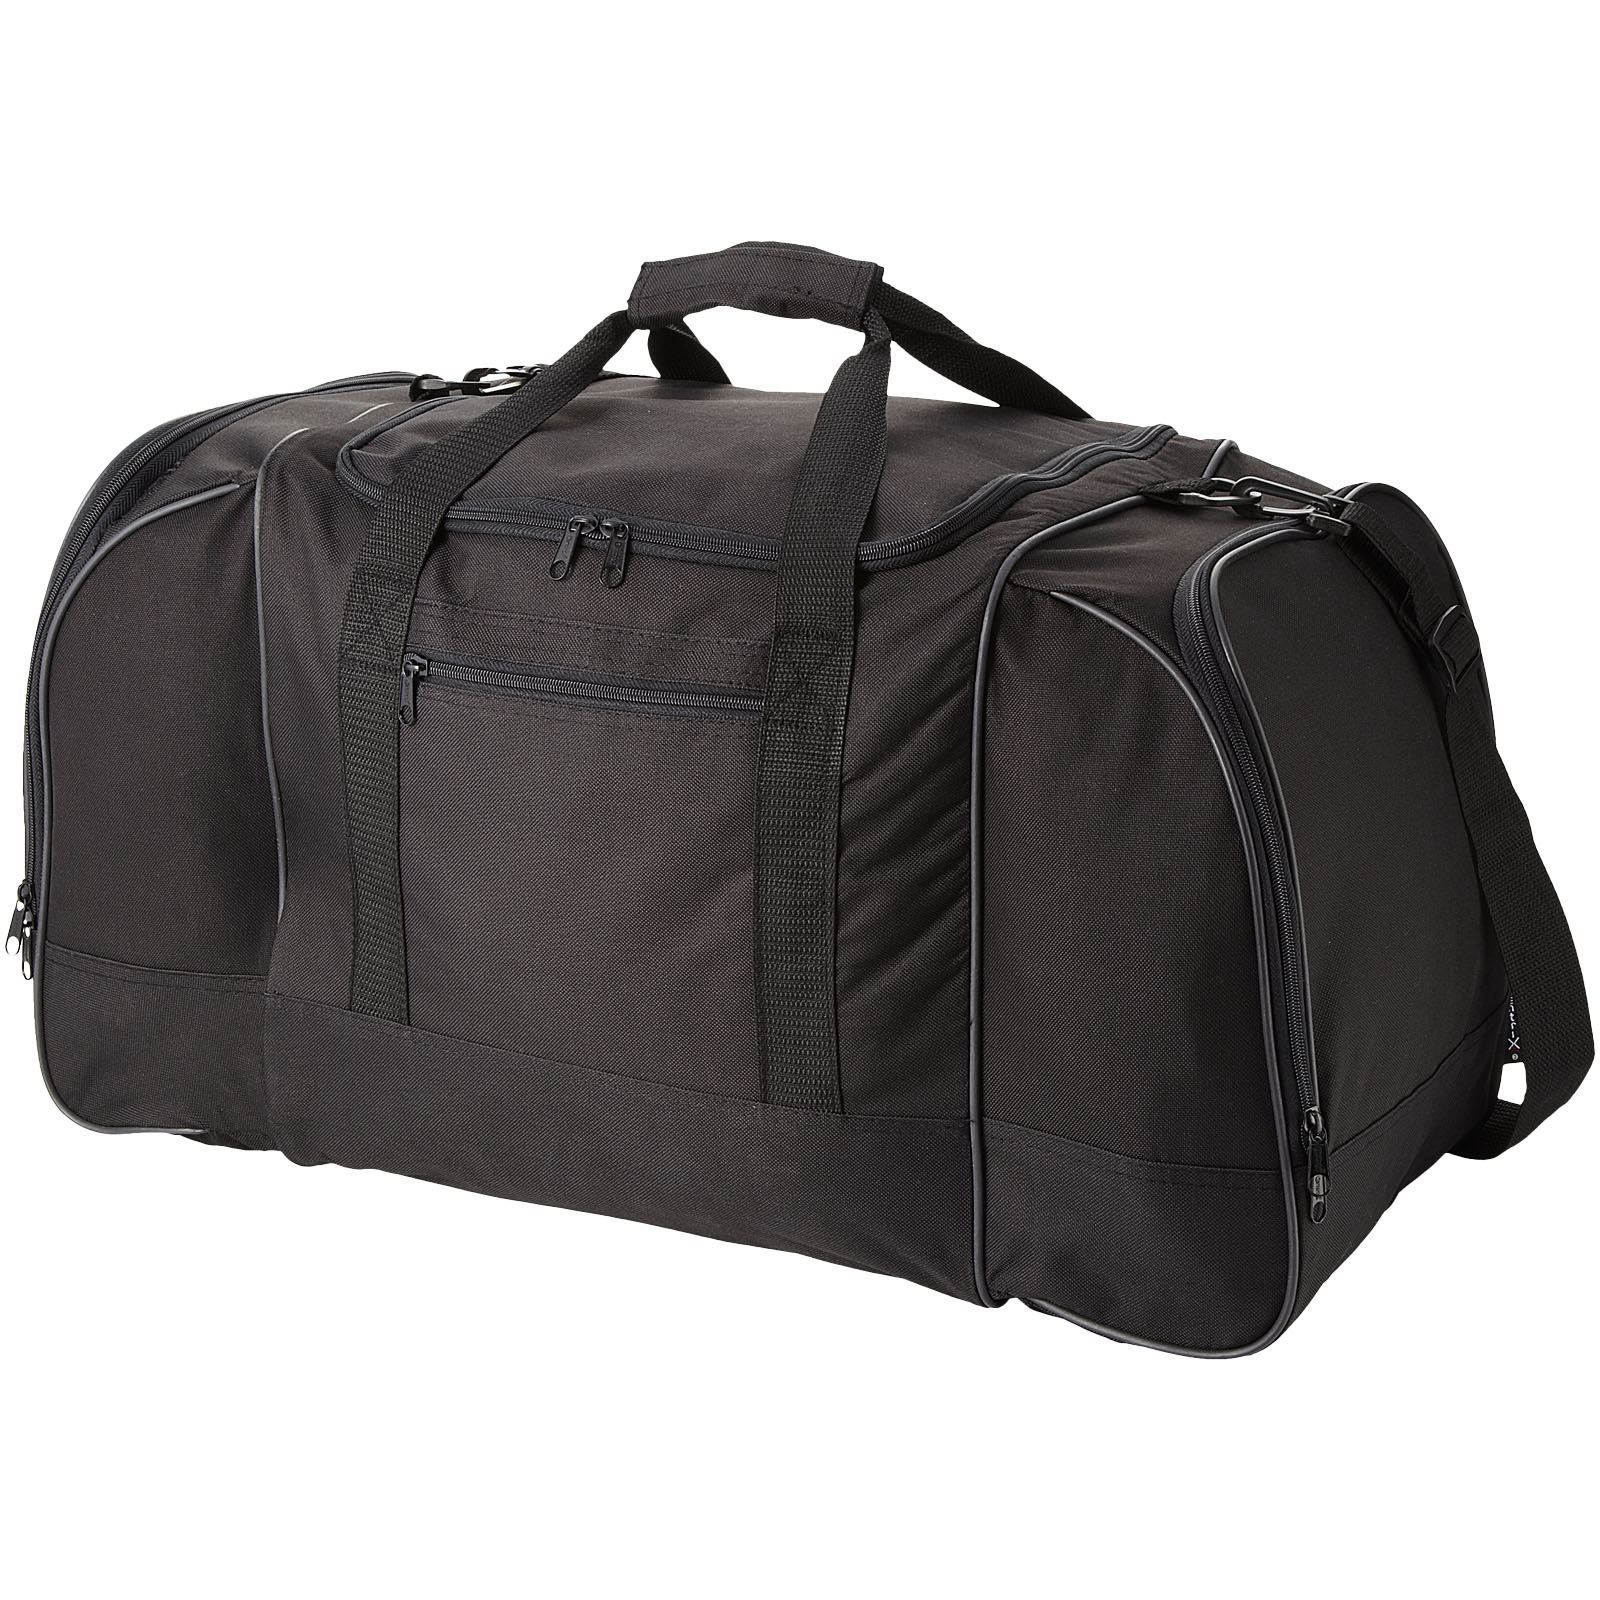 Bags - Nevada travel duffel bag 30L